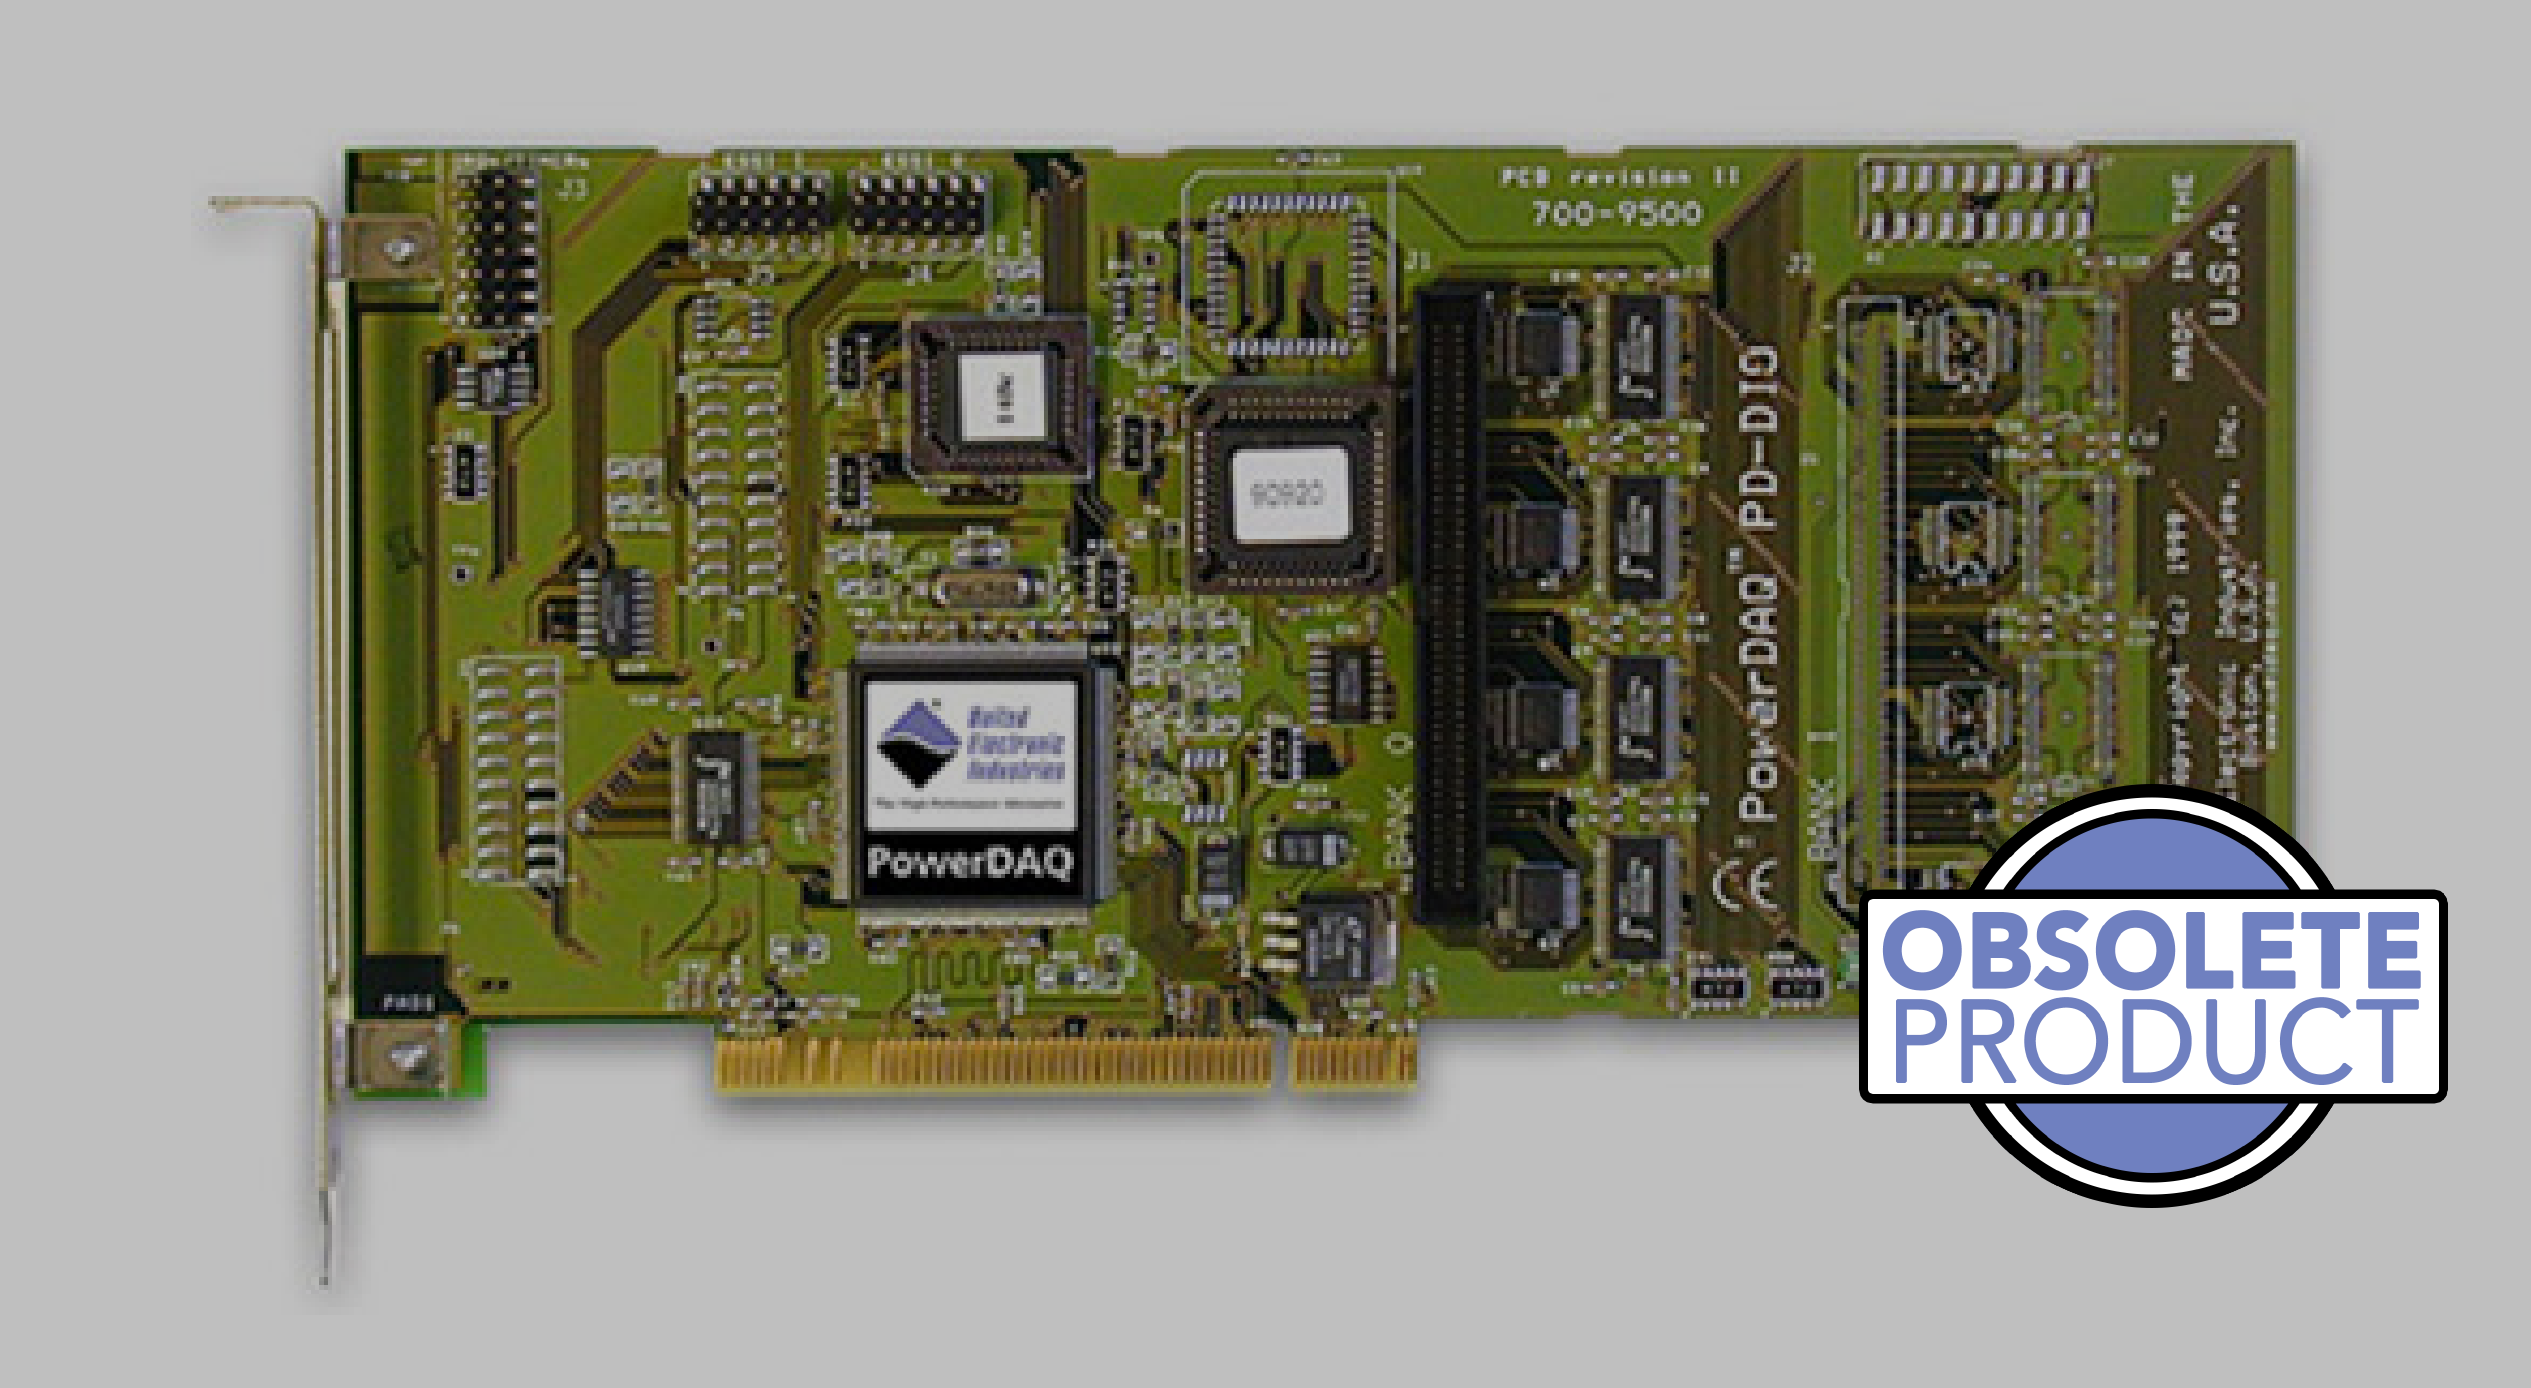 64-channel, 16-bit PCI digital I/O board